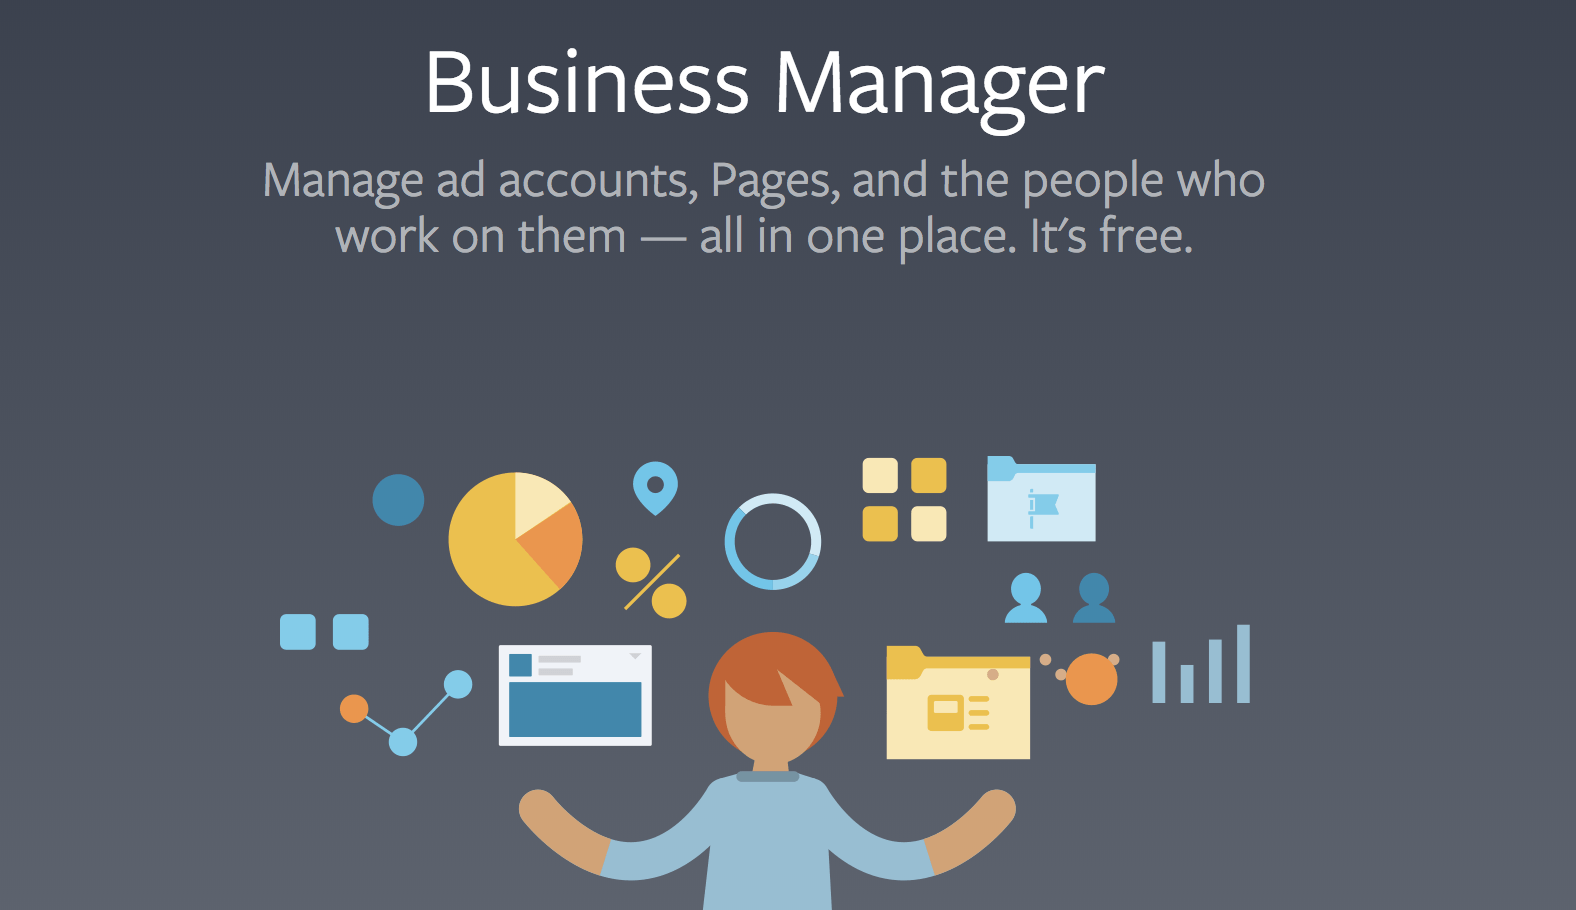 How to set up Facebook Business Manager - Pulse Media - Online Marketing